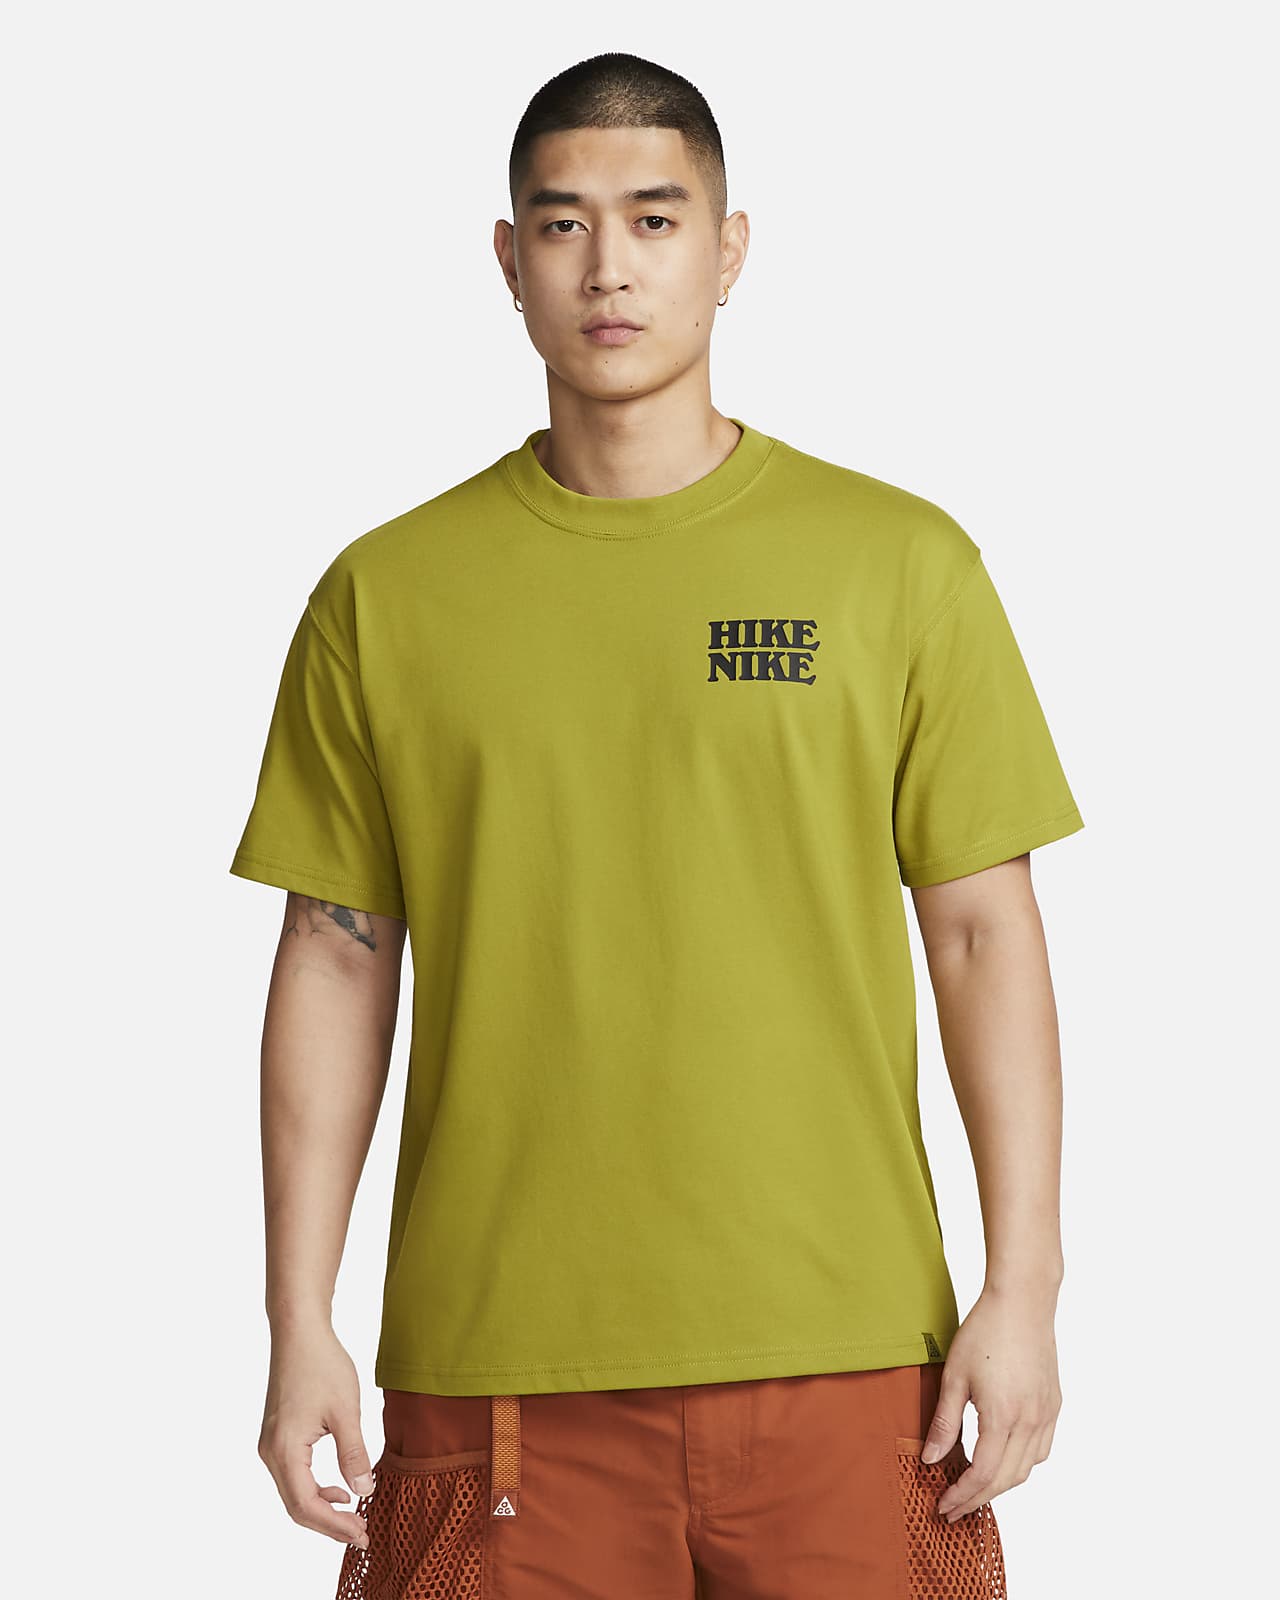 NIKE公式】ナイキ ACG メンズ Tシャツ.オンラインストア (通販サイト)